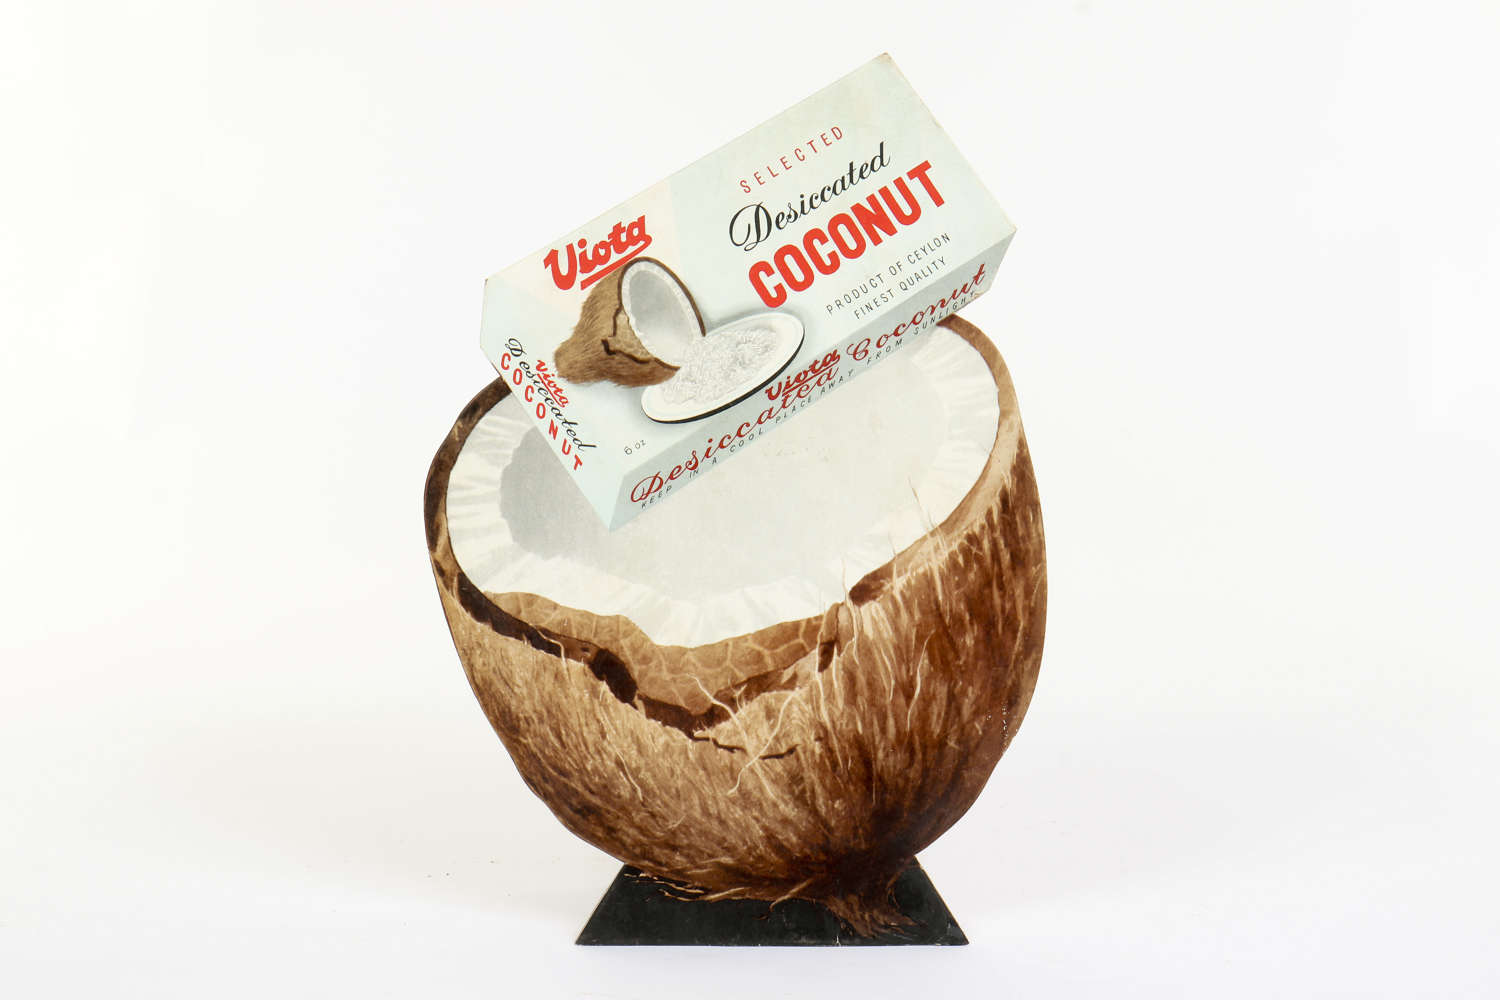 Original vintage advertising showcard for Viota Desiccated Coconut